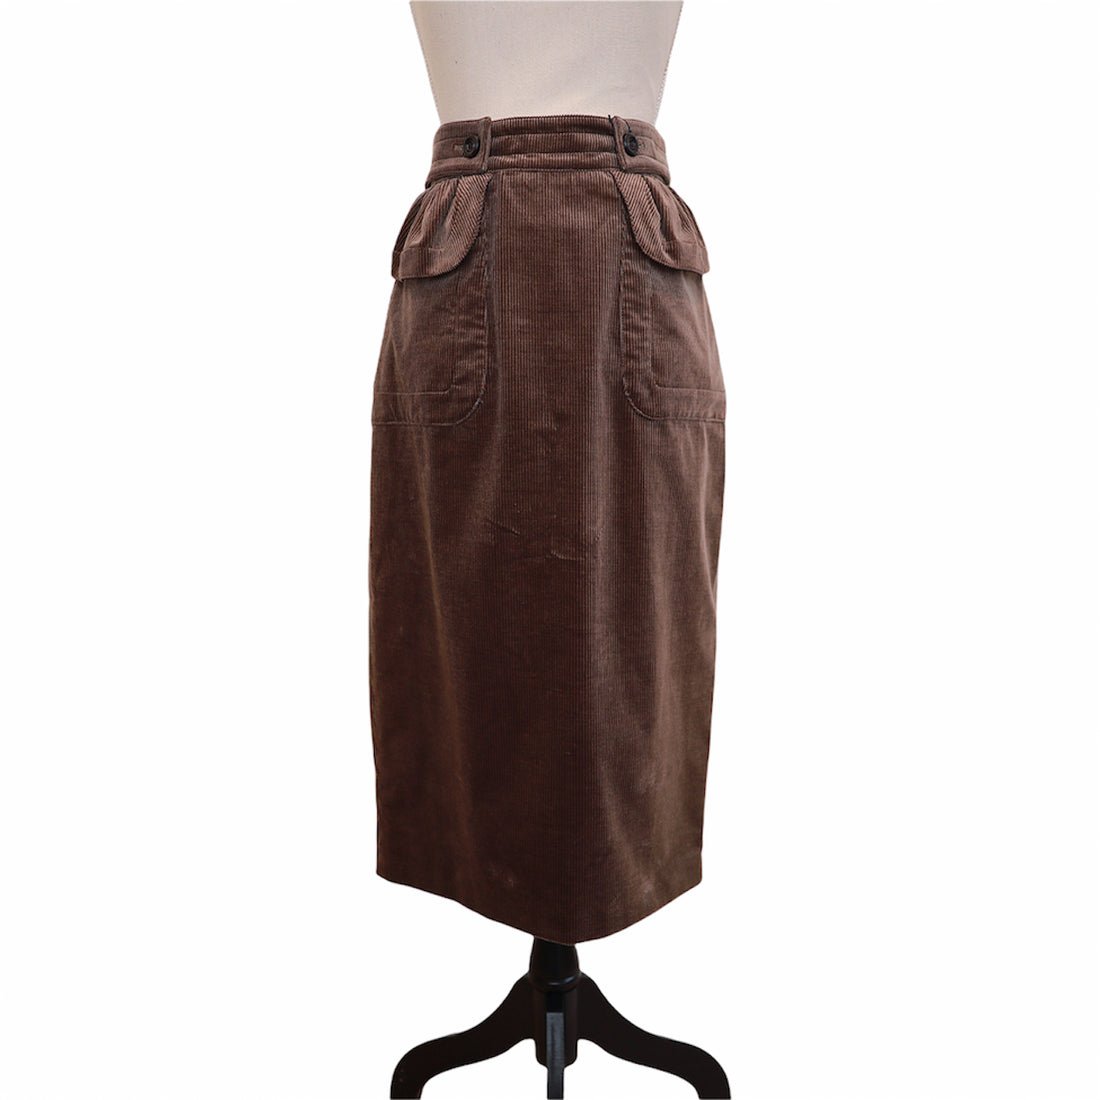 Burberry Prorsum Corduroy Skirt